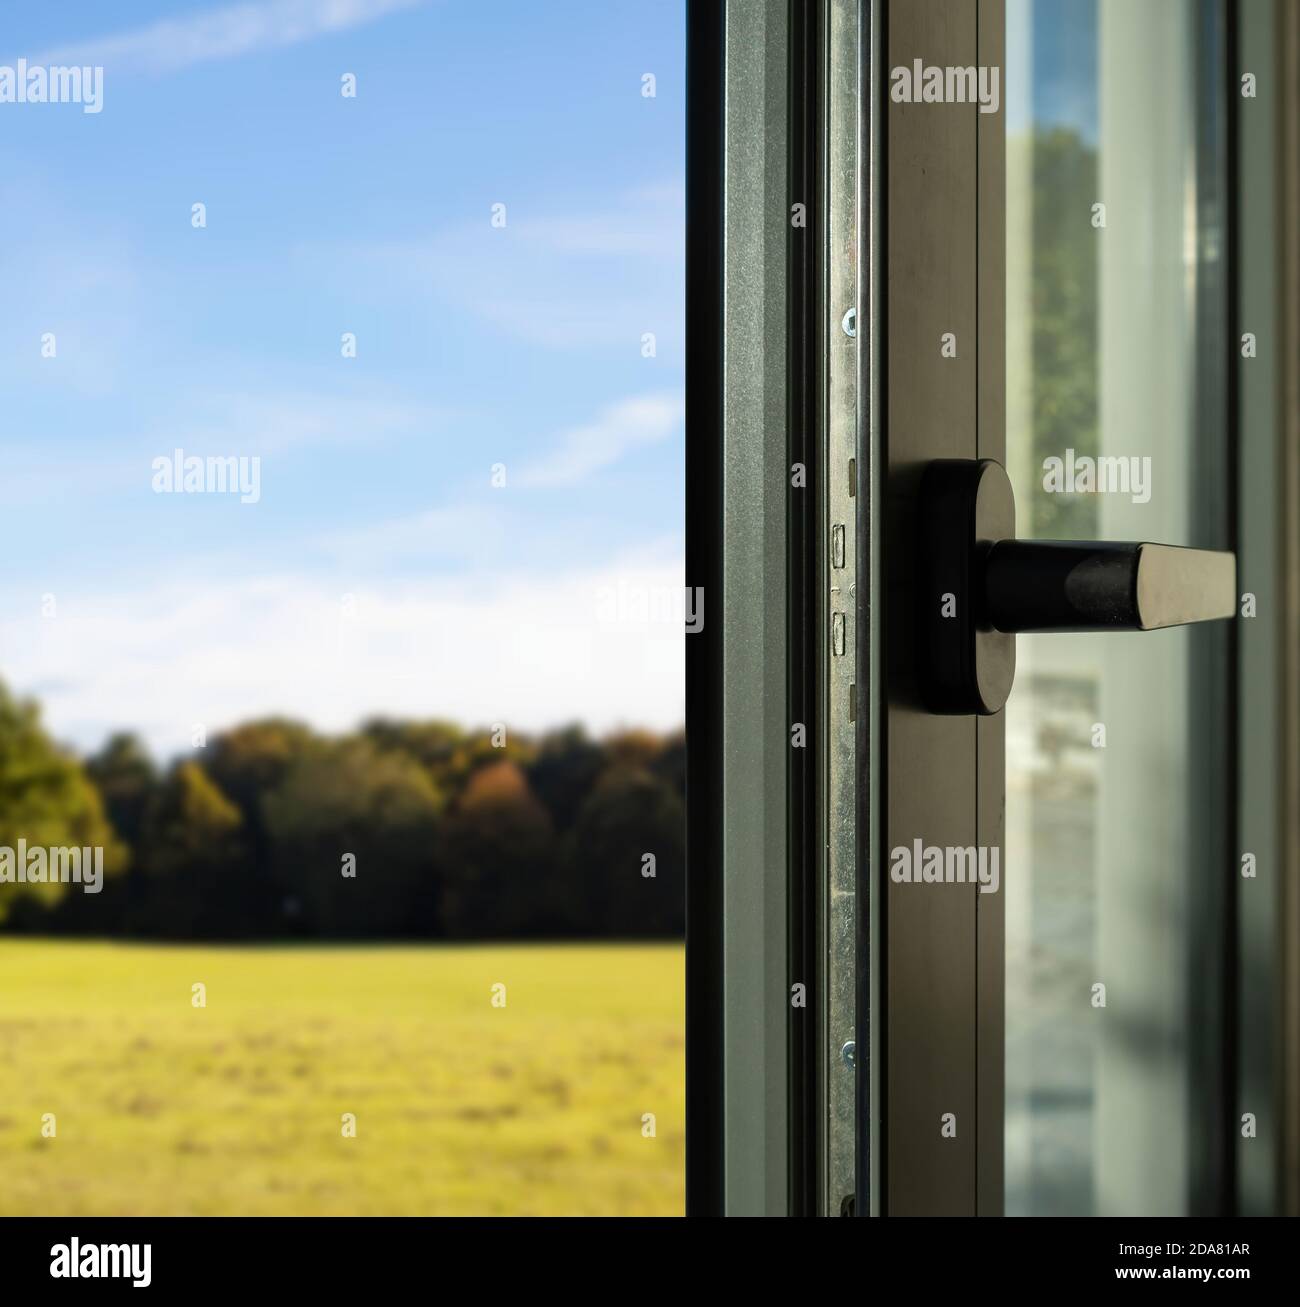 Aluminum door detail. Metal window frame open closeup view. Energy efficient, safety profile, blur outdoor nature background Stock Photo